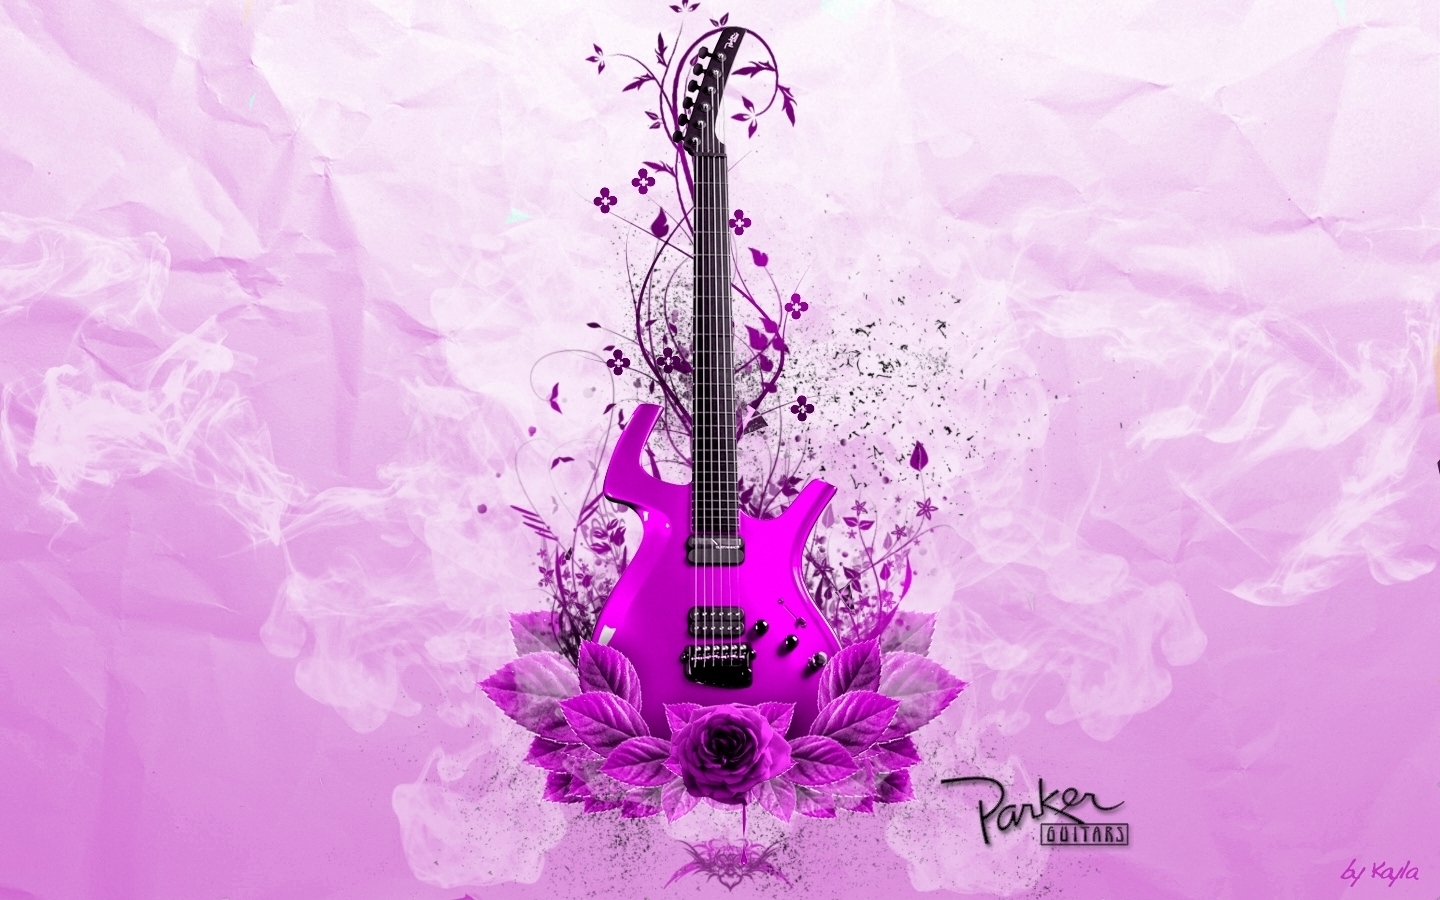 Download wallpaper music Guitar with tags: Purple, iMac, Guitar